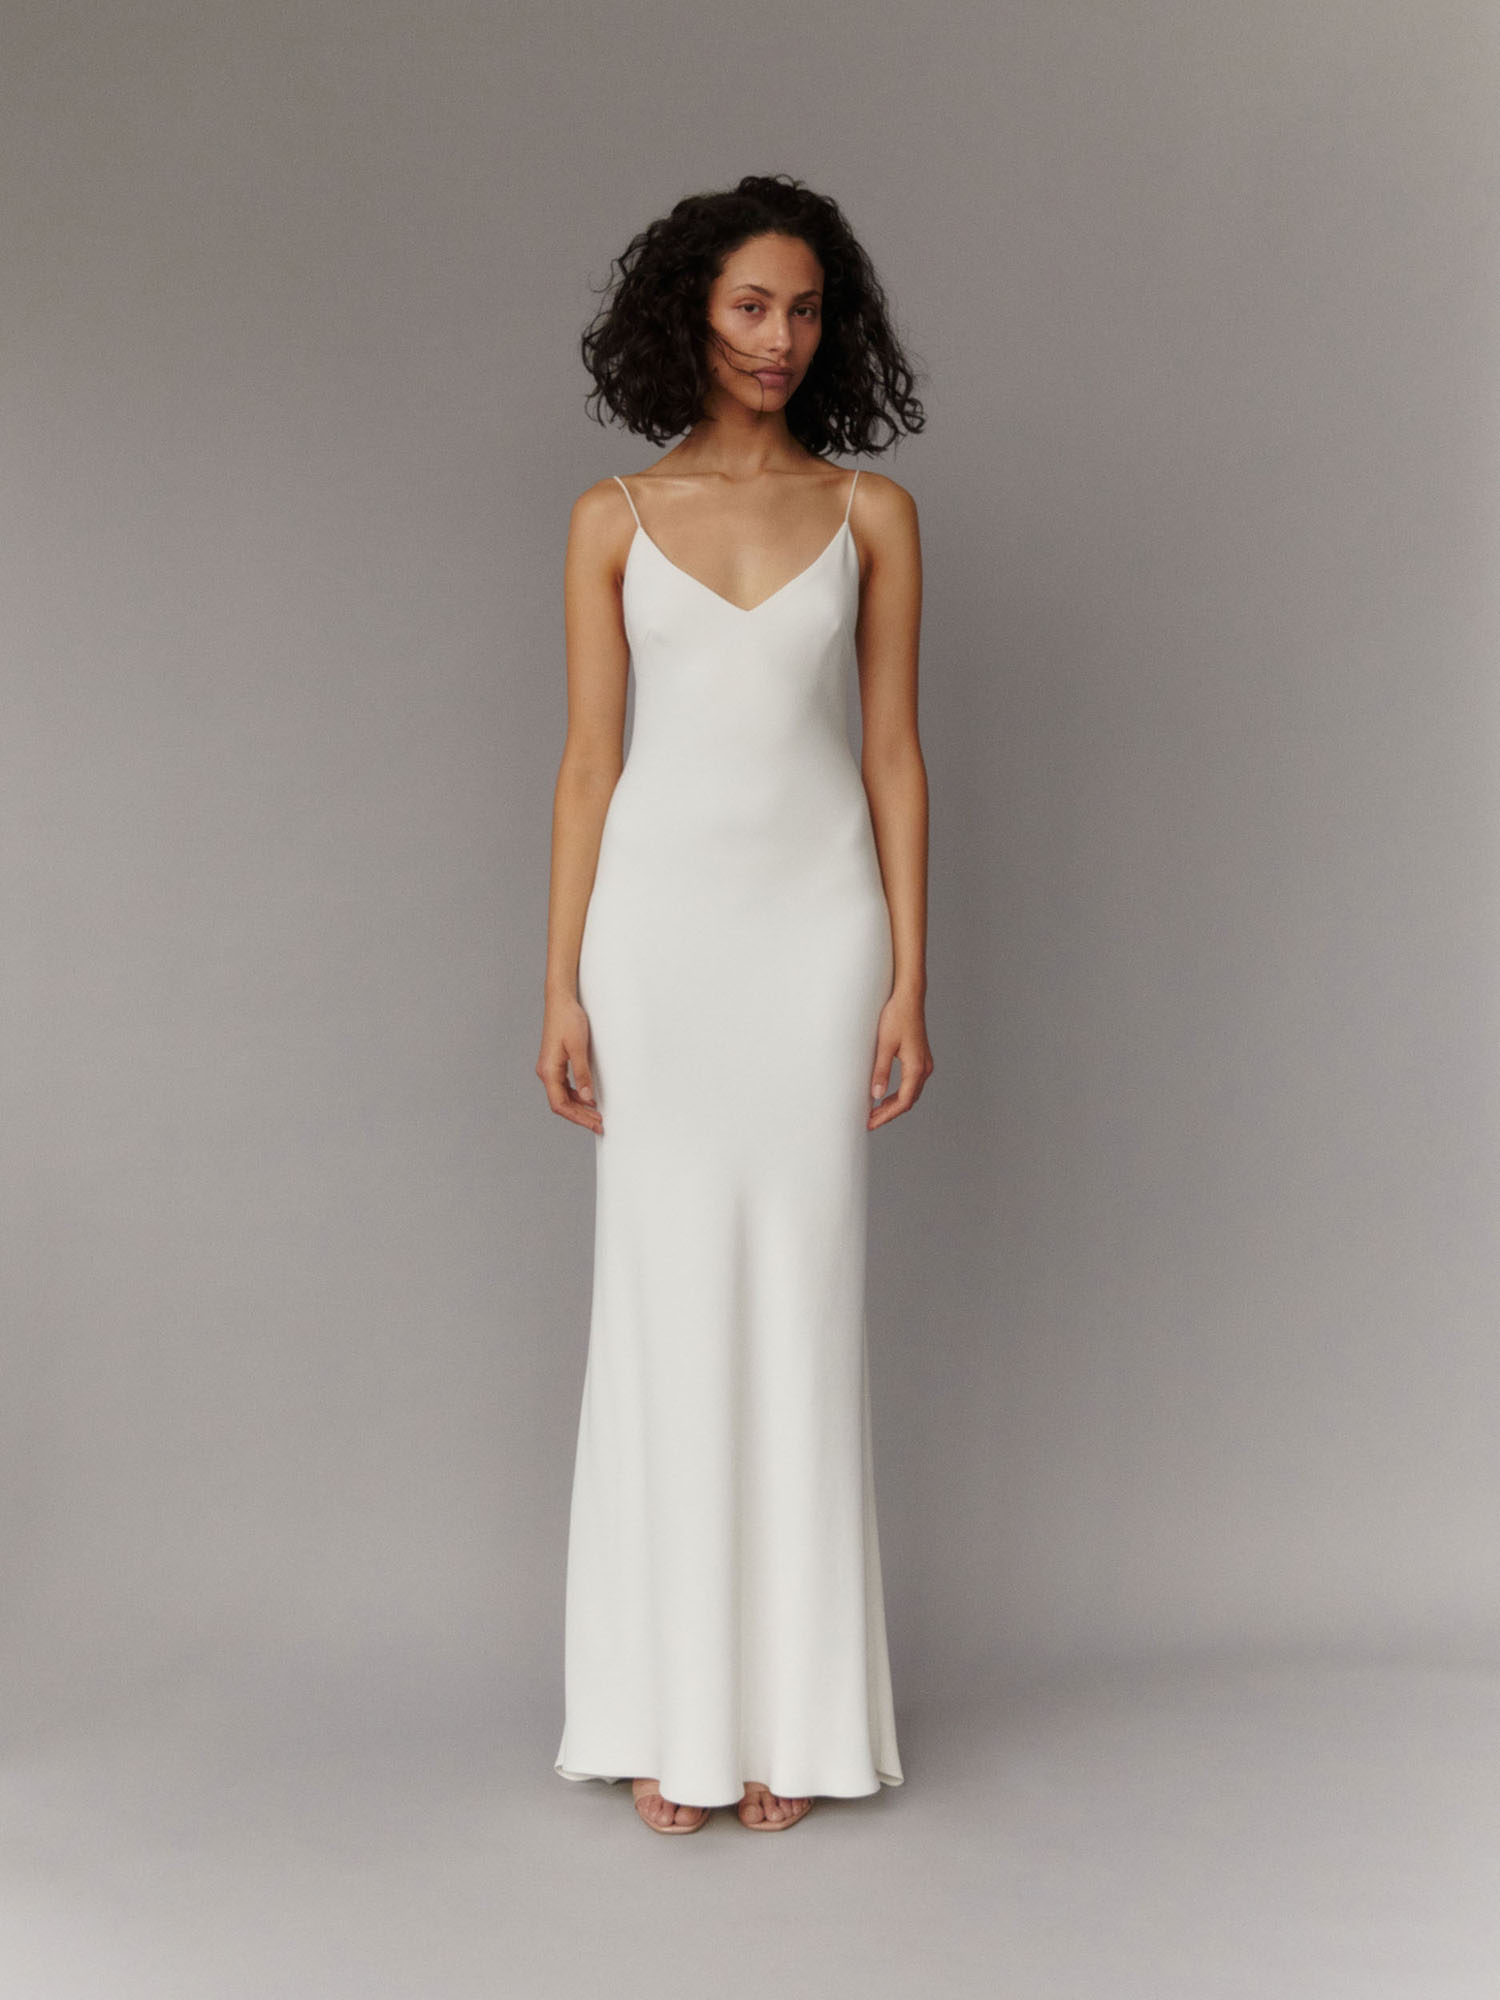 Ivory Slip Dress Bridesmaid Dresses